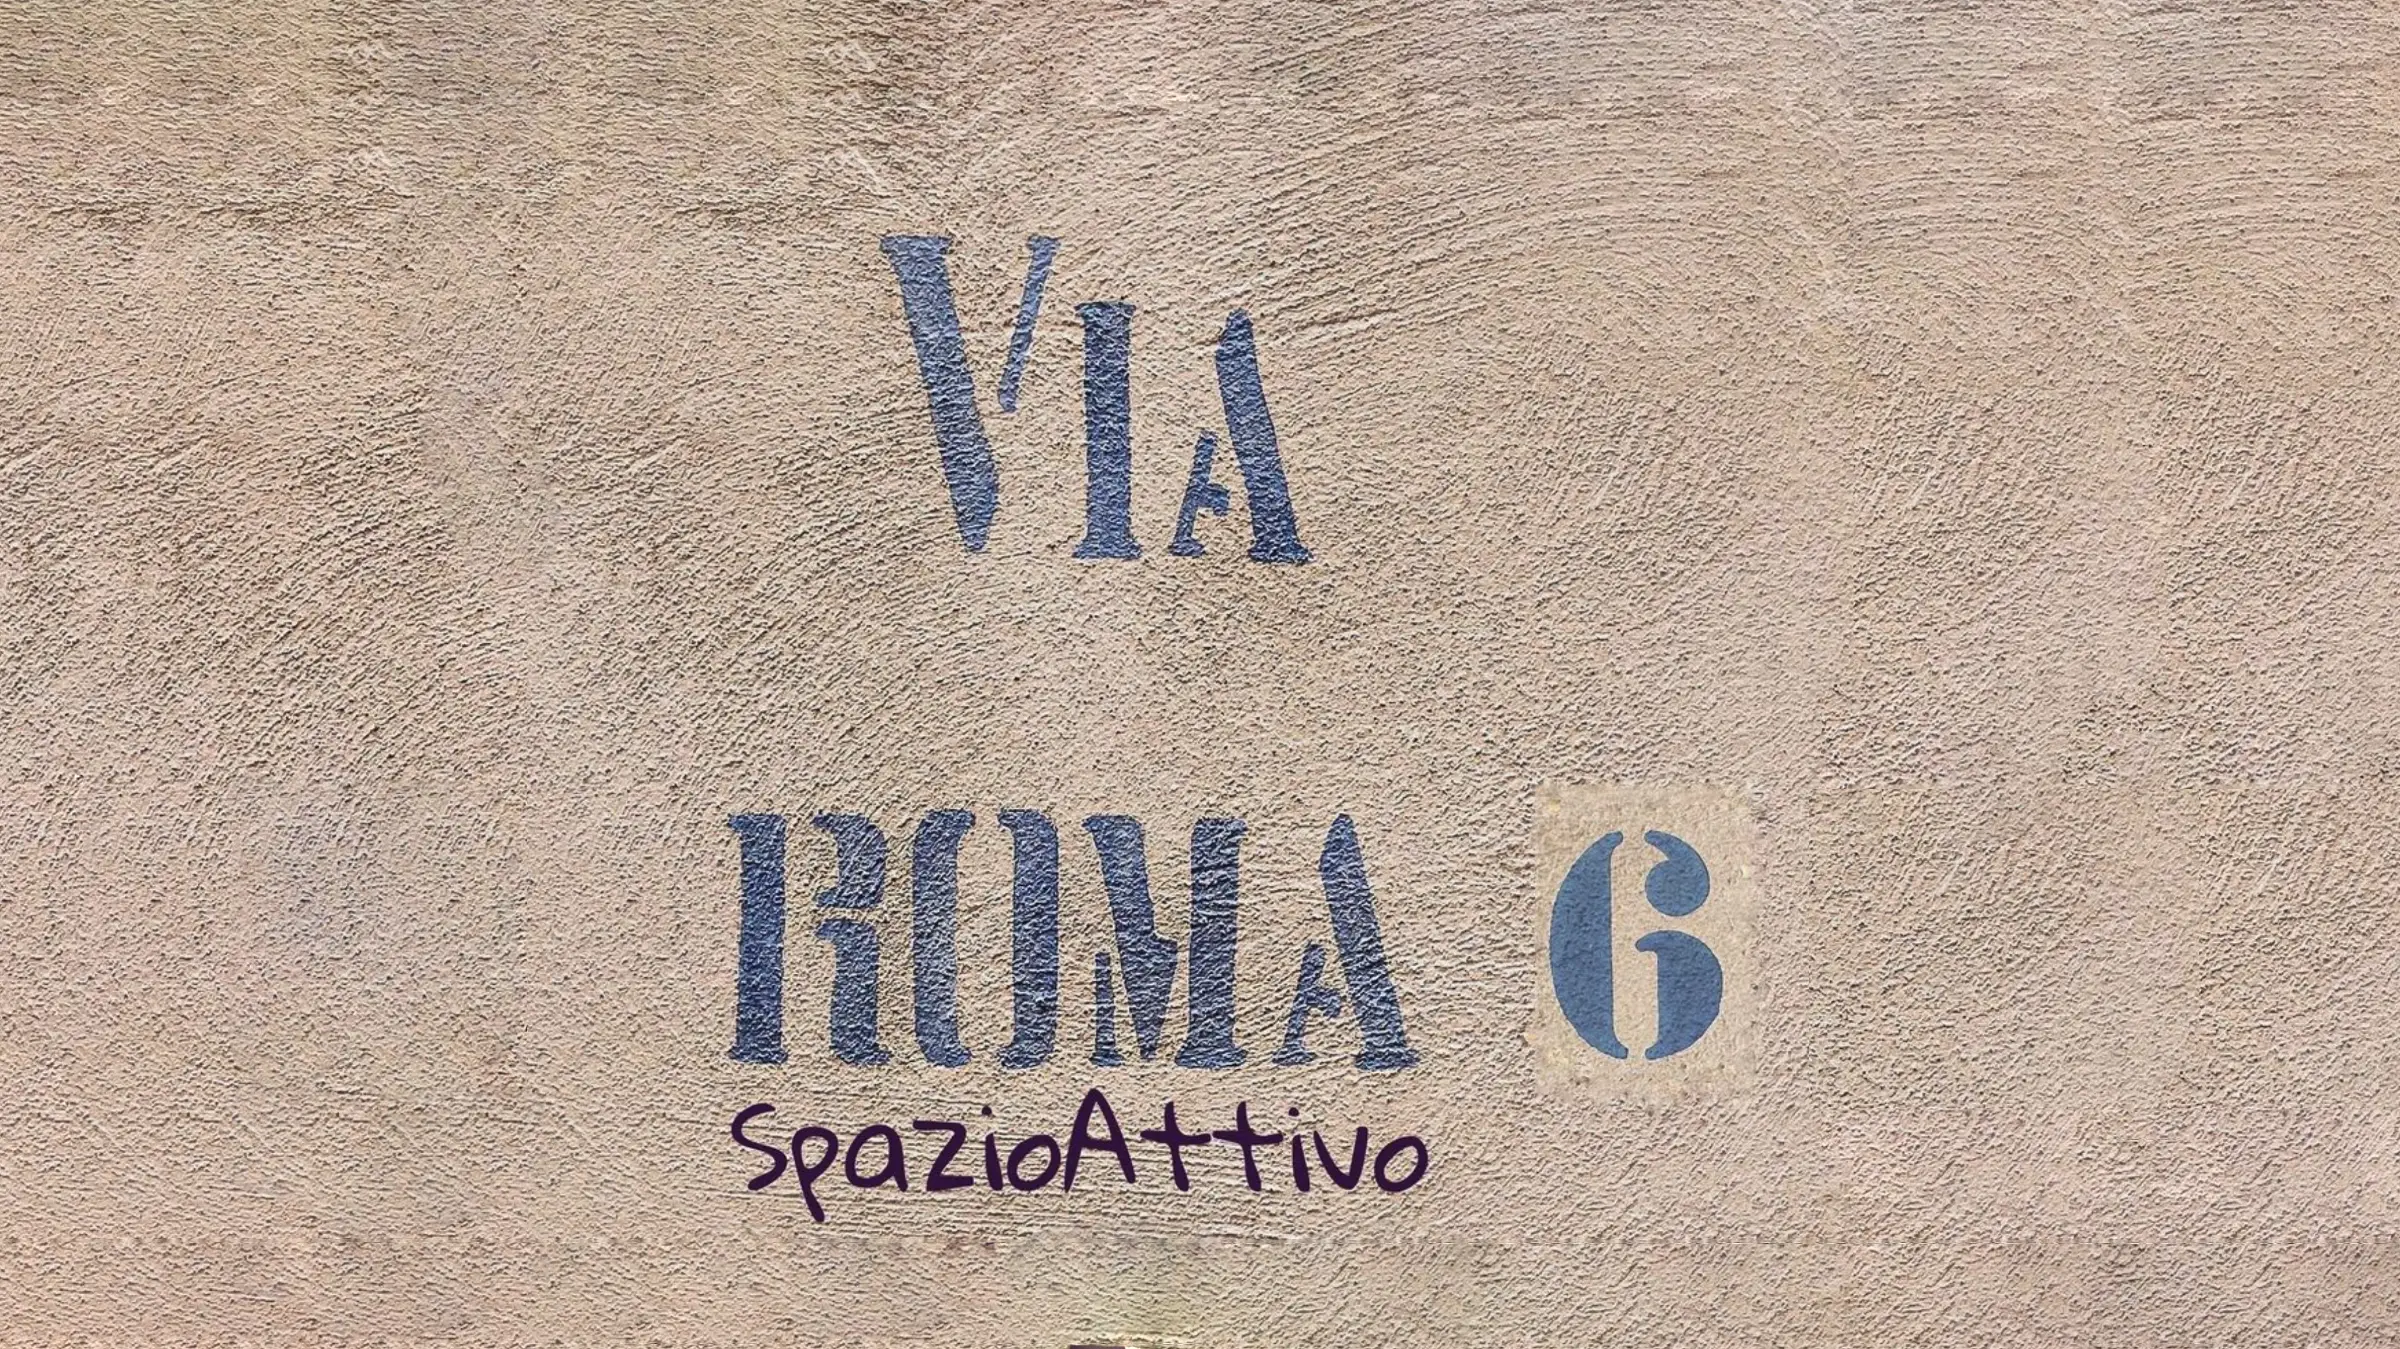 Opening of Via Roma 6, SpazioAttivo